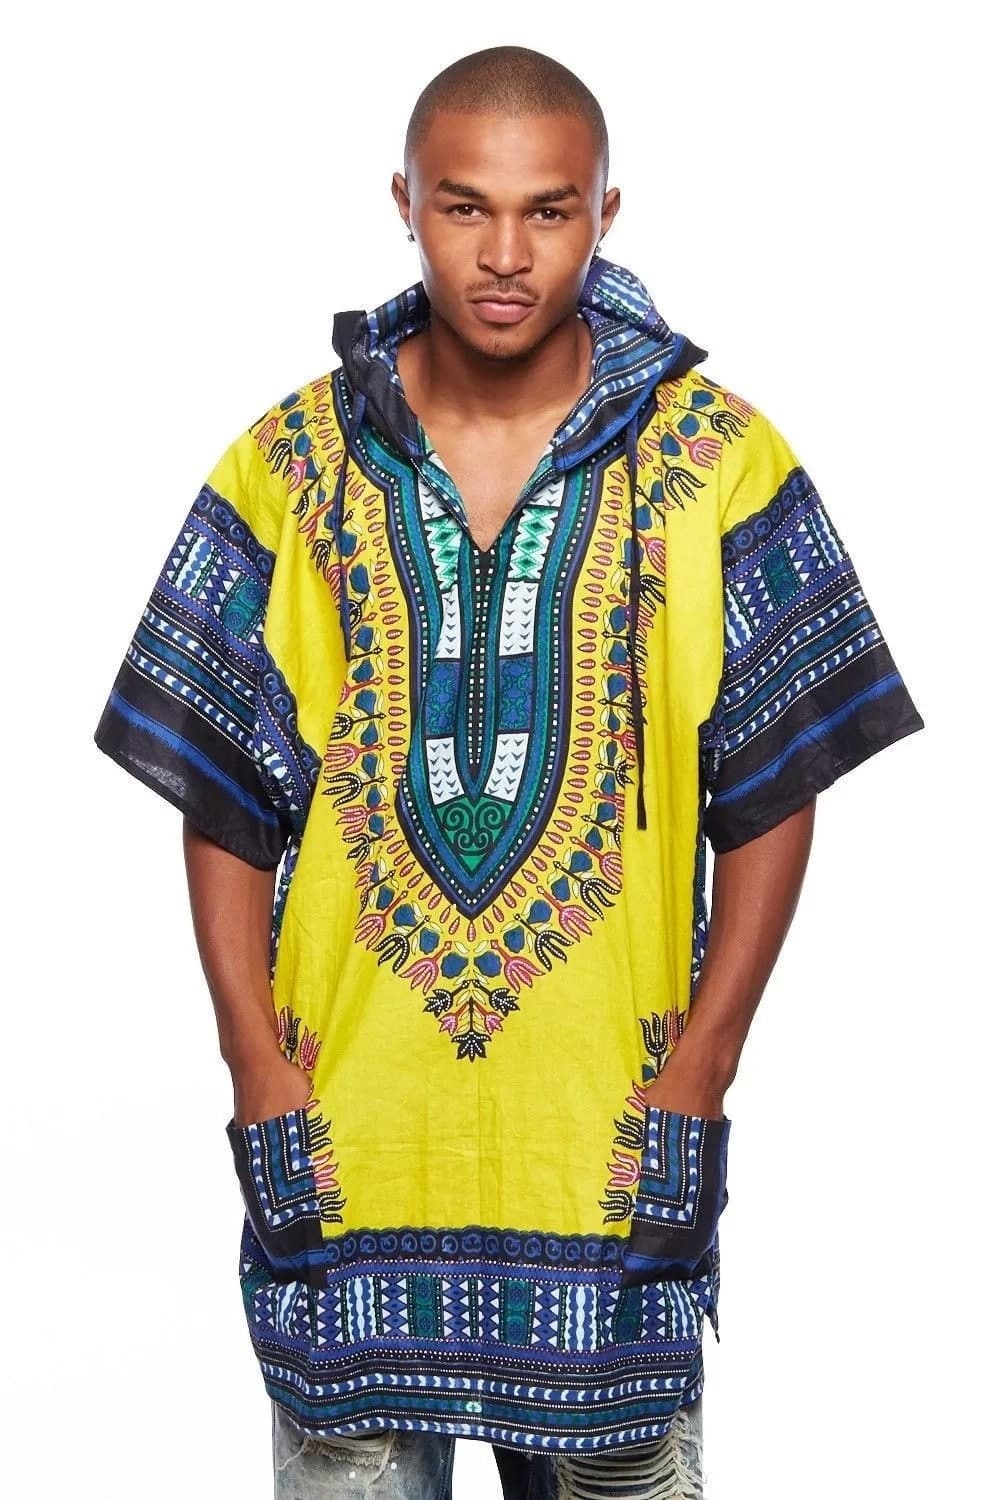 traditional african wear
african dinner wear for men
african wear for men